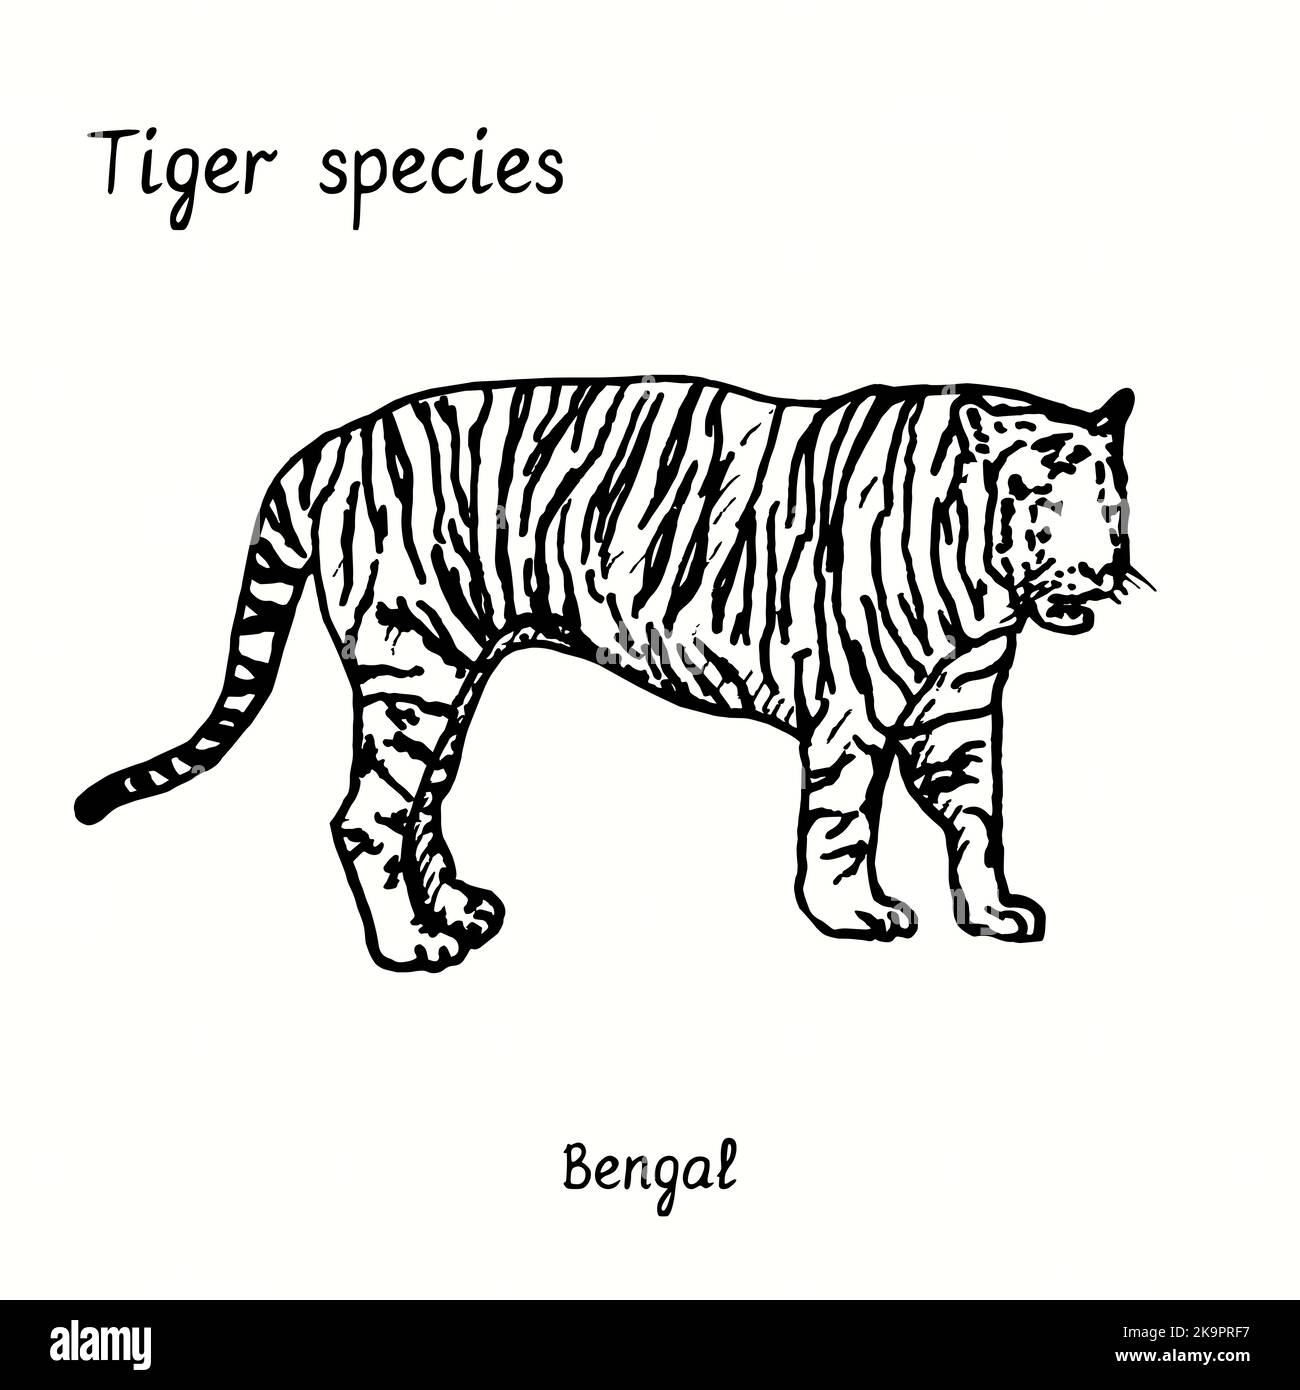 Sumatran Tiger Coloring Page  Get Coloring Pages